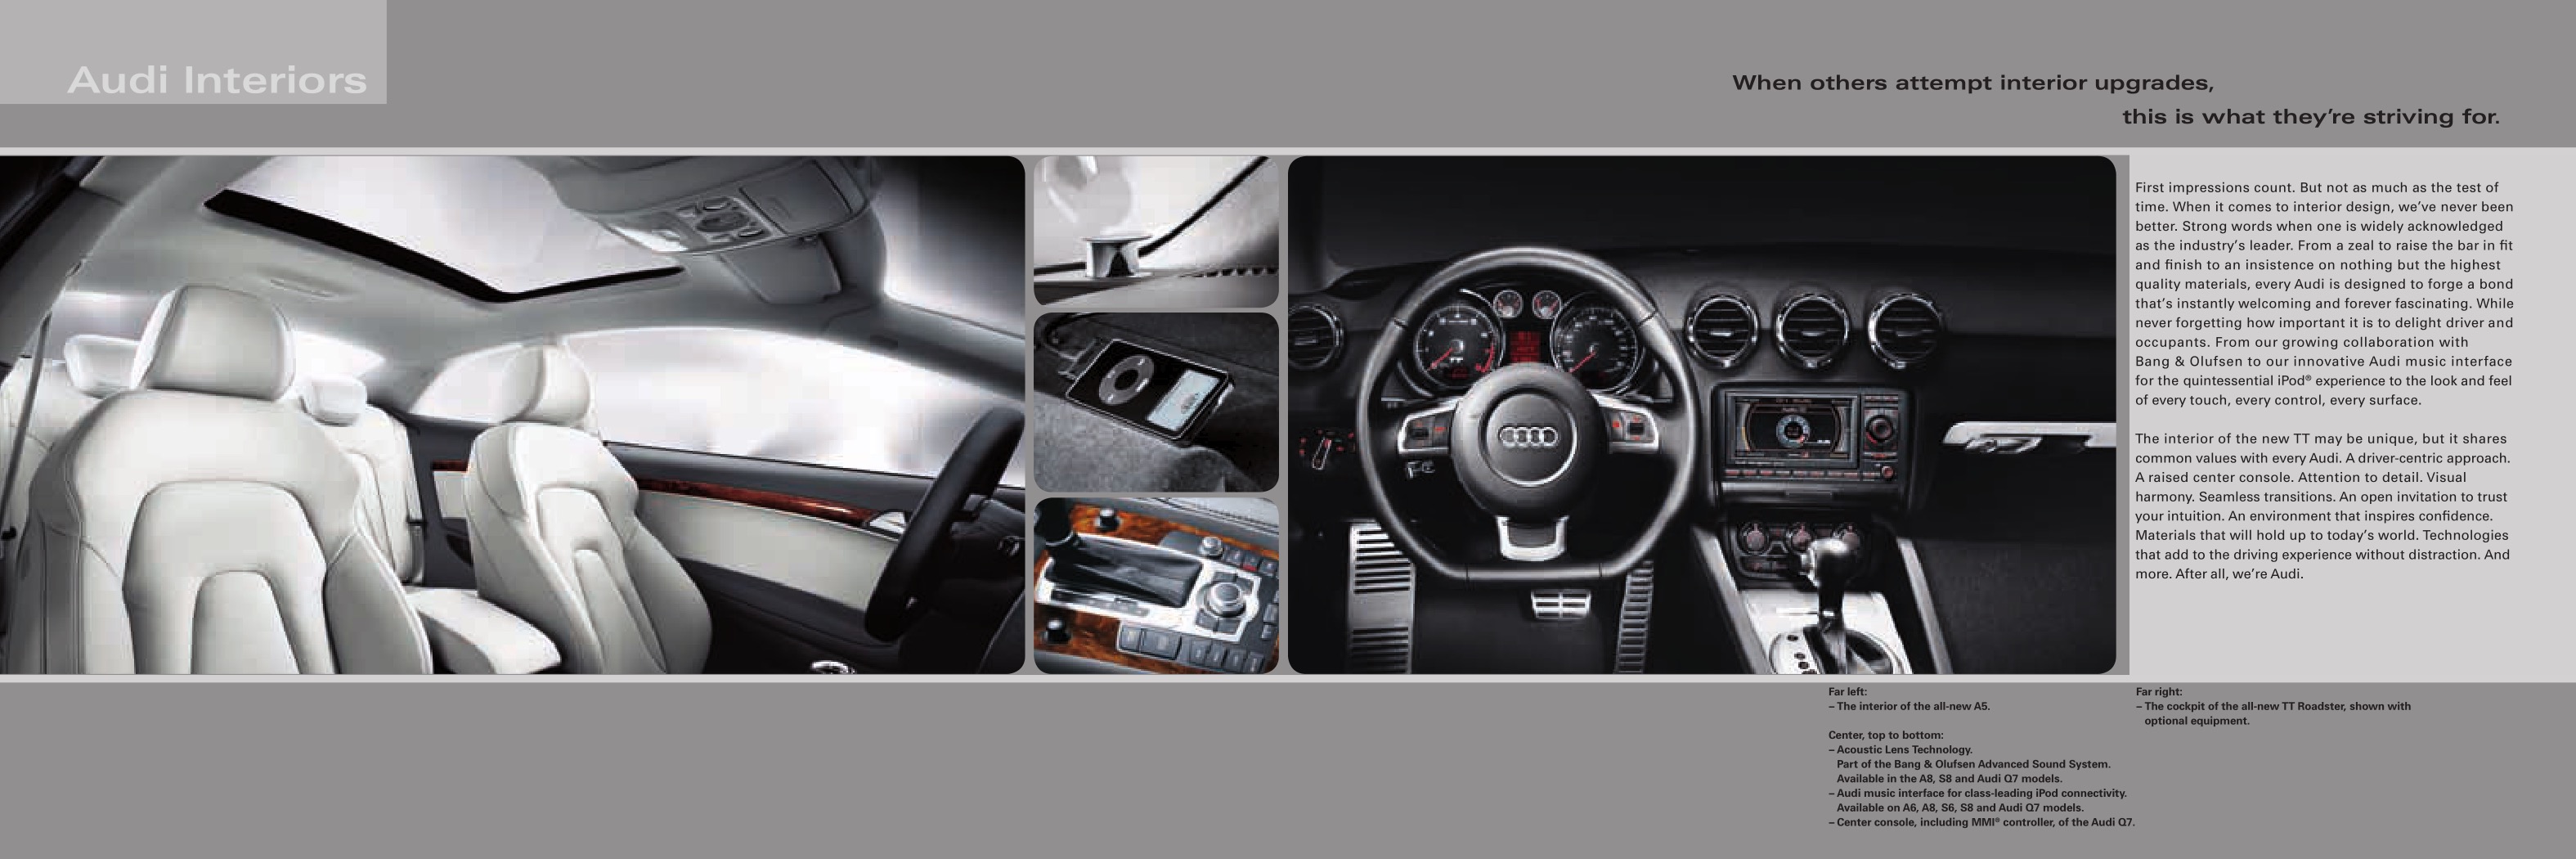 2008 Audi Brochure Page 7